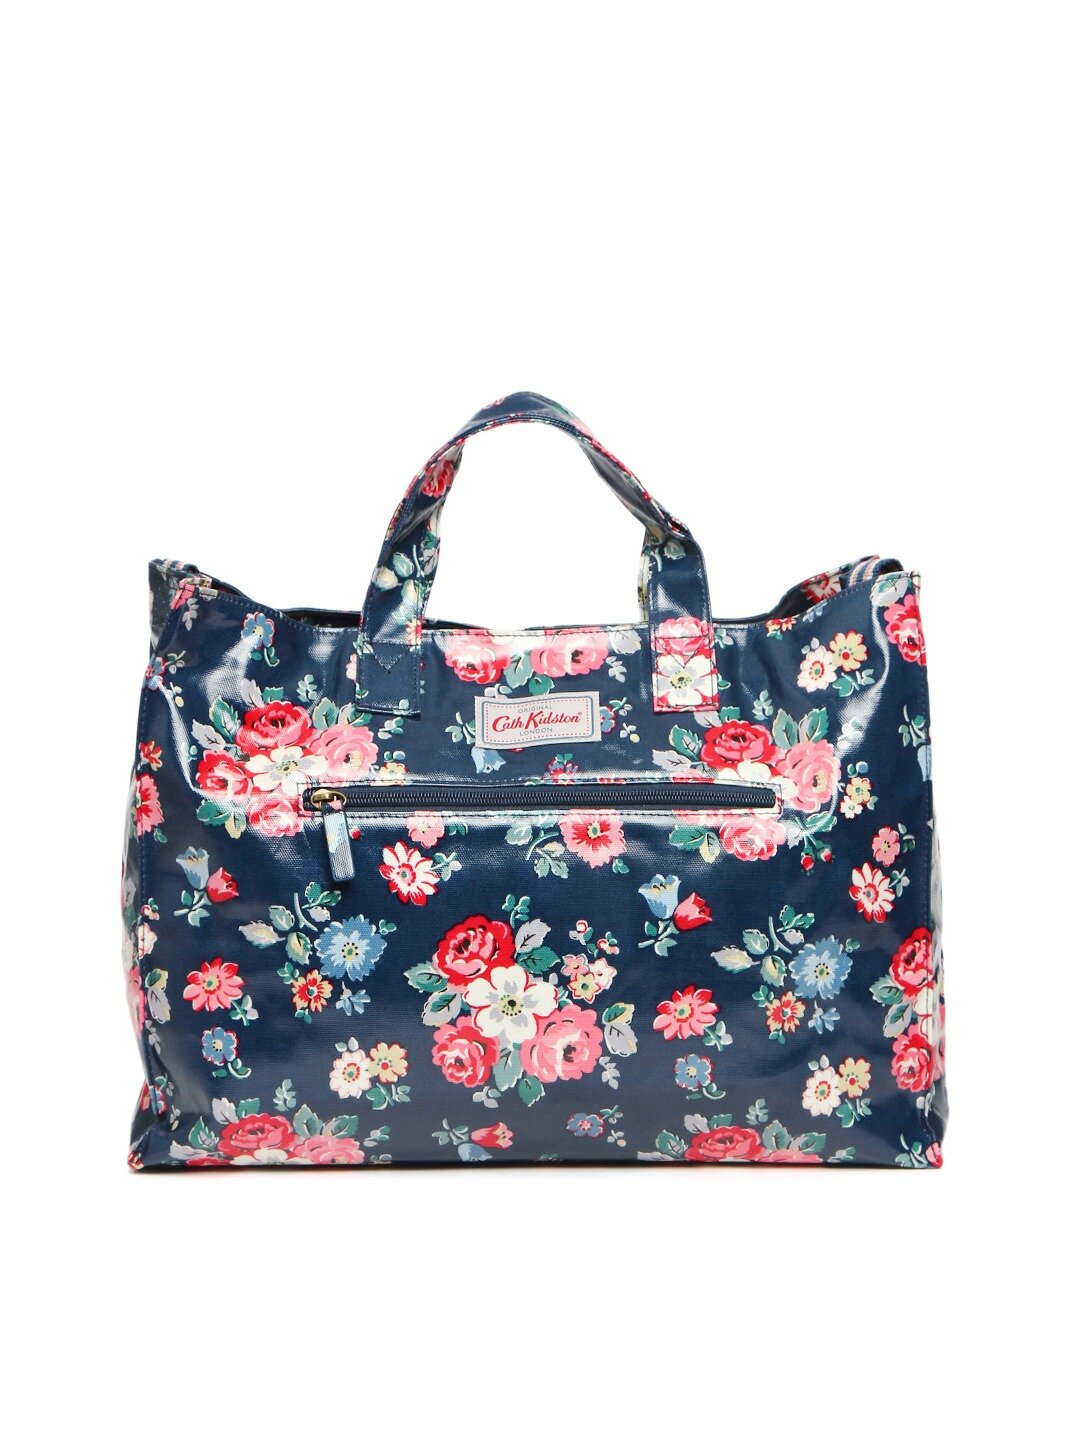 Cath Kidston Floral Print Tote Bag in Navy Blue and Pink.jpg